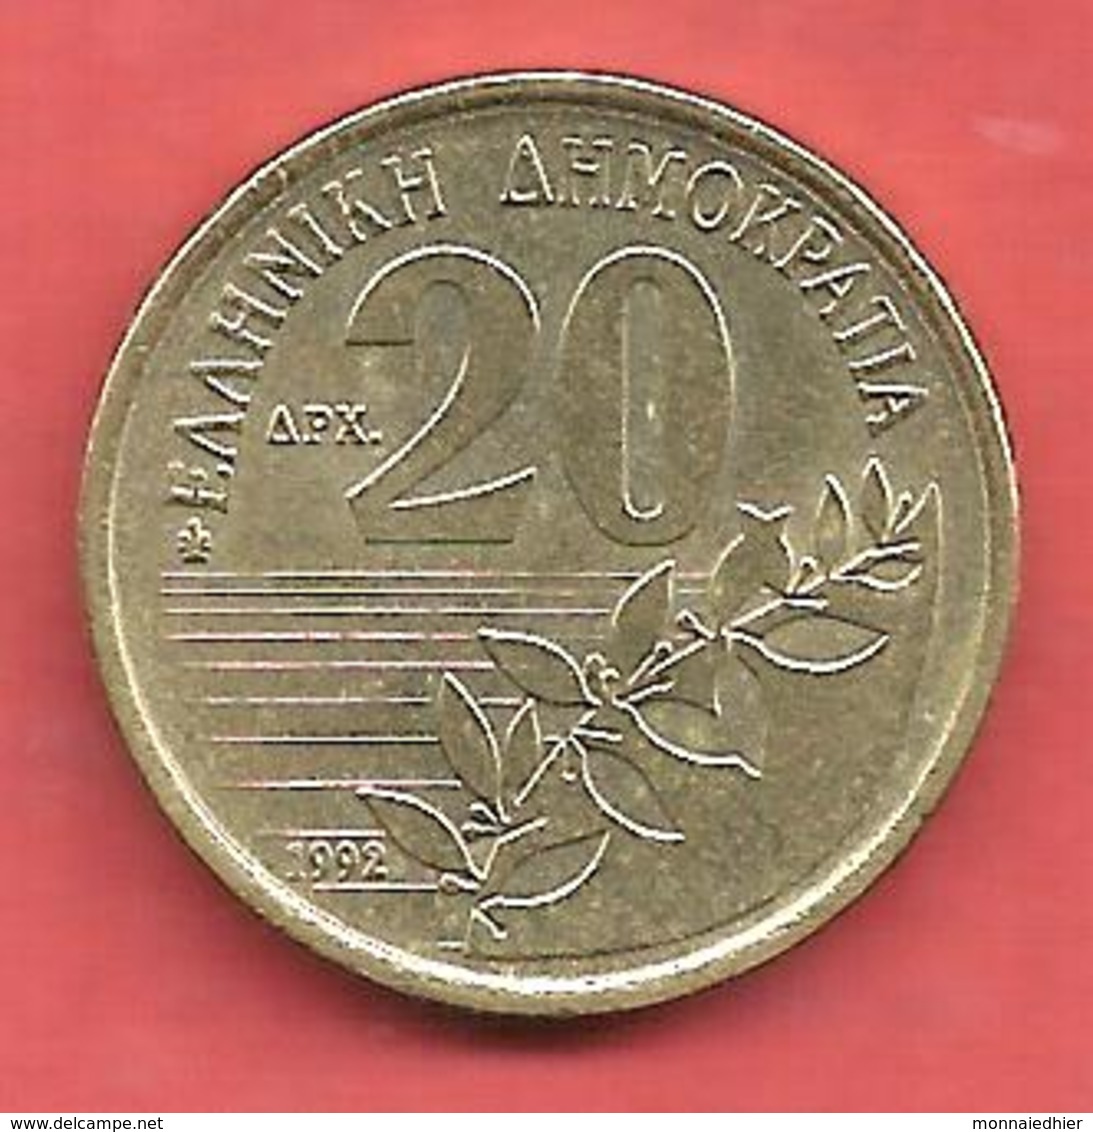 20 Drachmes , GRECE  , Nickel-Bronze , 1992 , N° KM # 154 - Grèce